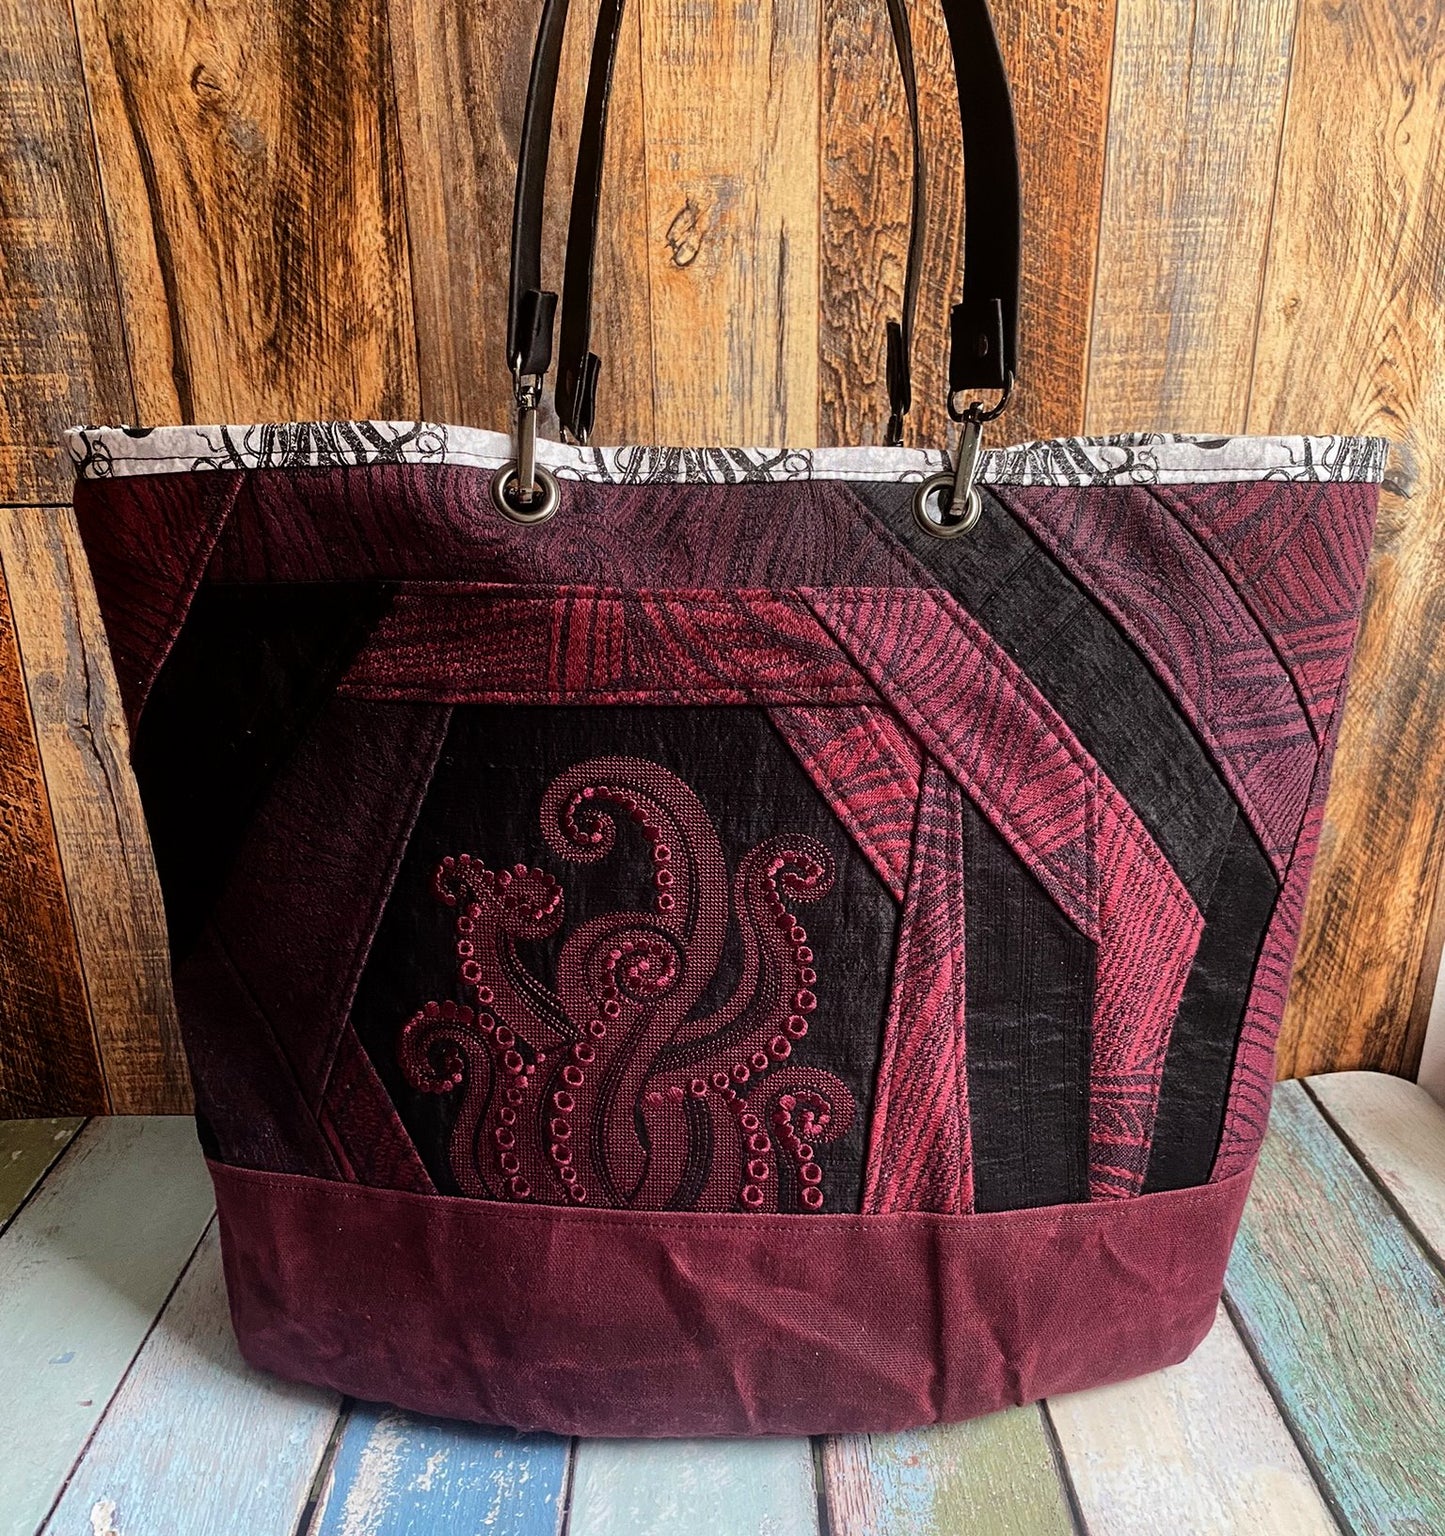 Opulent Octopus Quilted Basket Bag of Holding